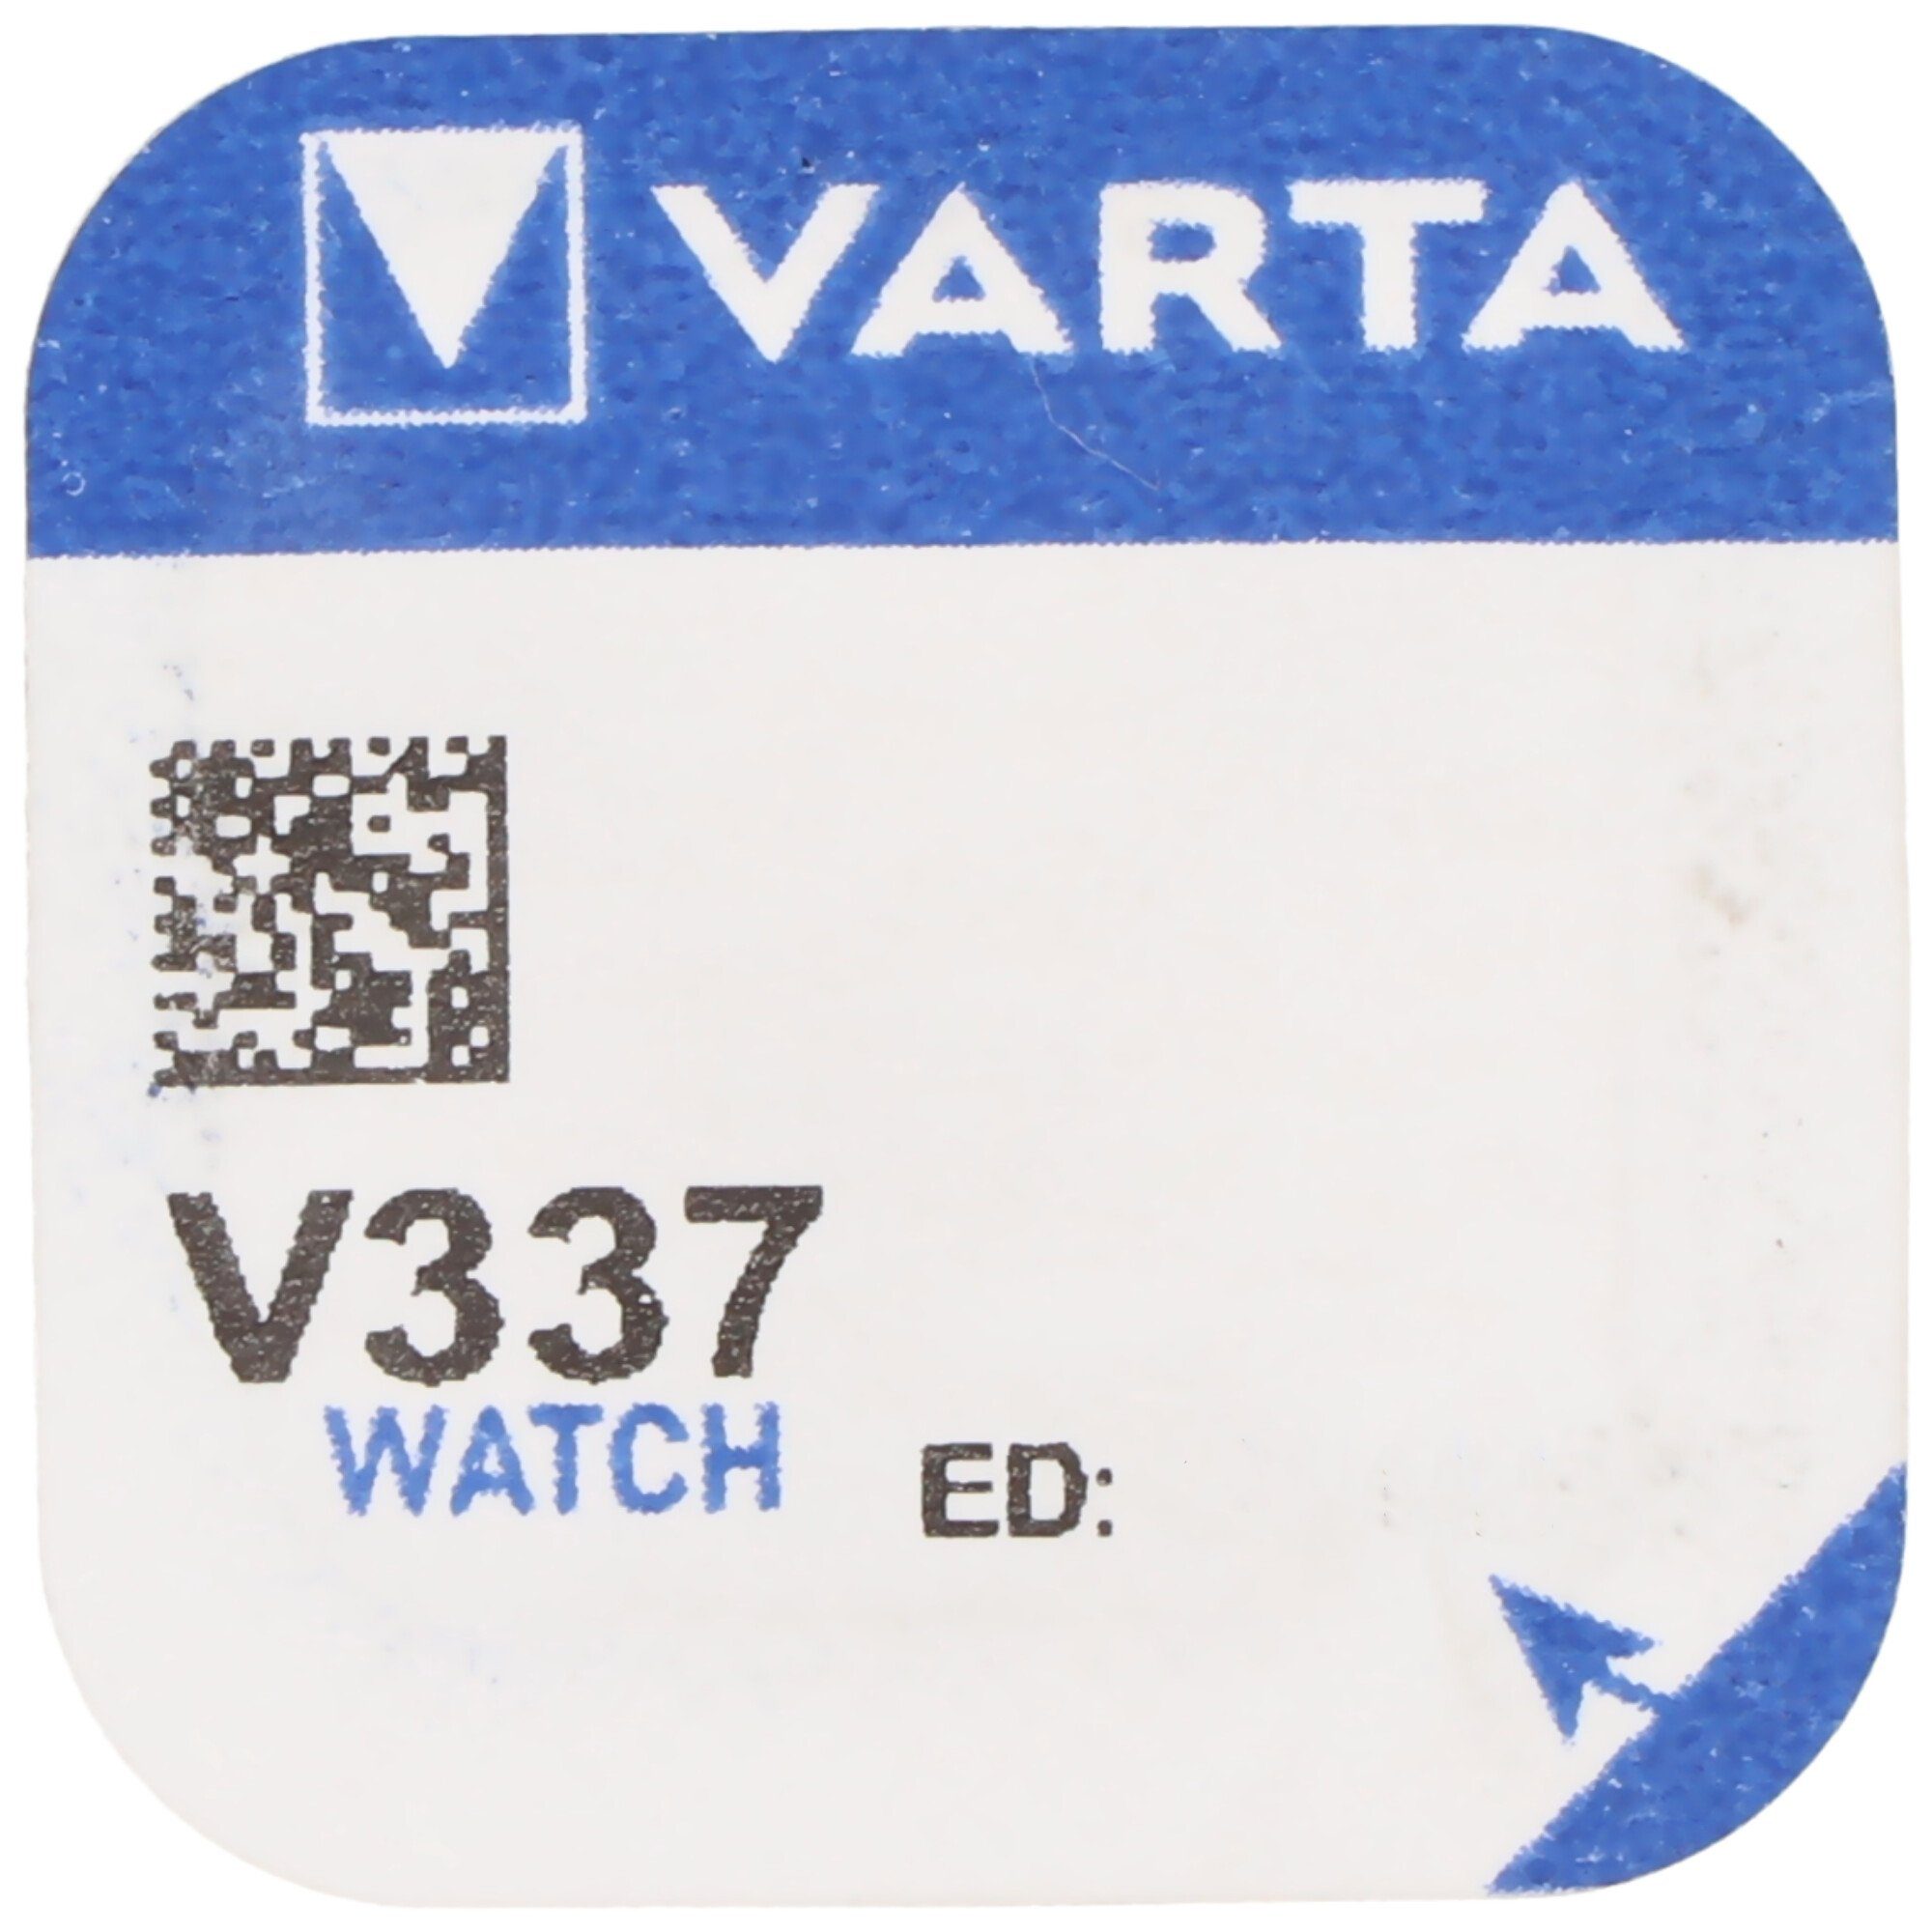 VARTA 337, Varta V337, SR416SW Knopfzelle für Uhren etc. Knopfzelle, (1,6 V)